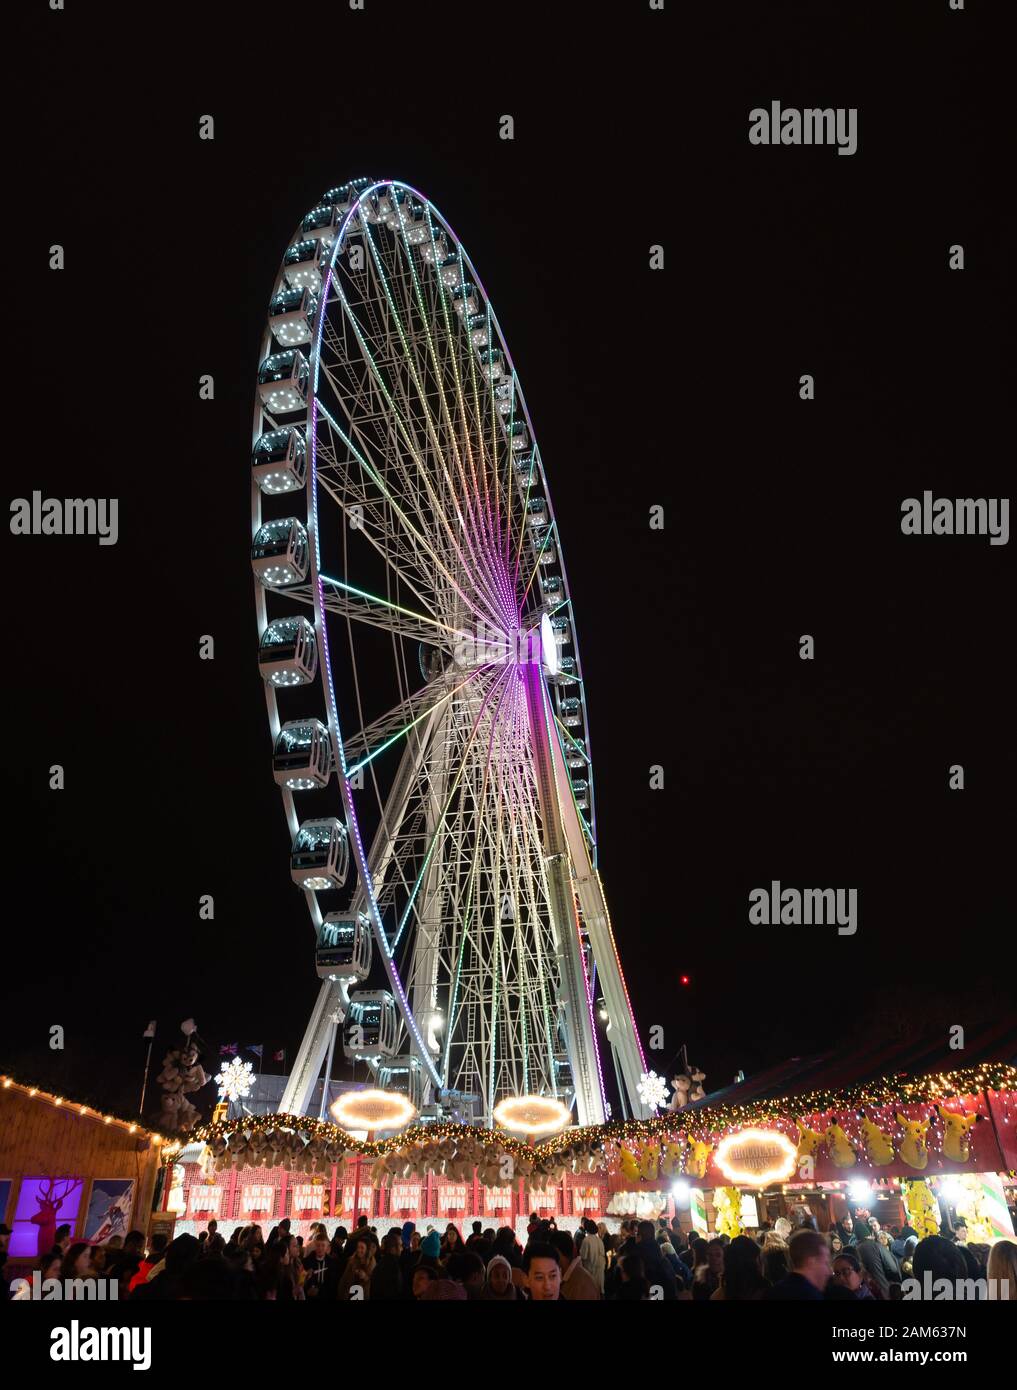 London, England, UK - December 28, 2019: Spinning Ferris wheel at night in winter wonderland in London, in Christmas holiday Stock Photo